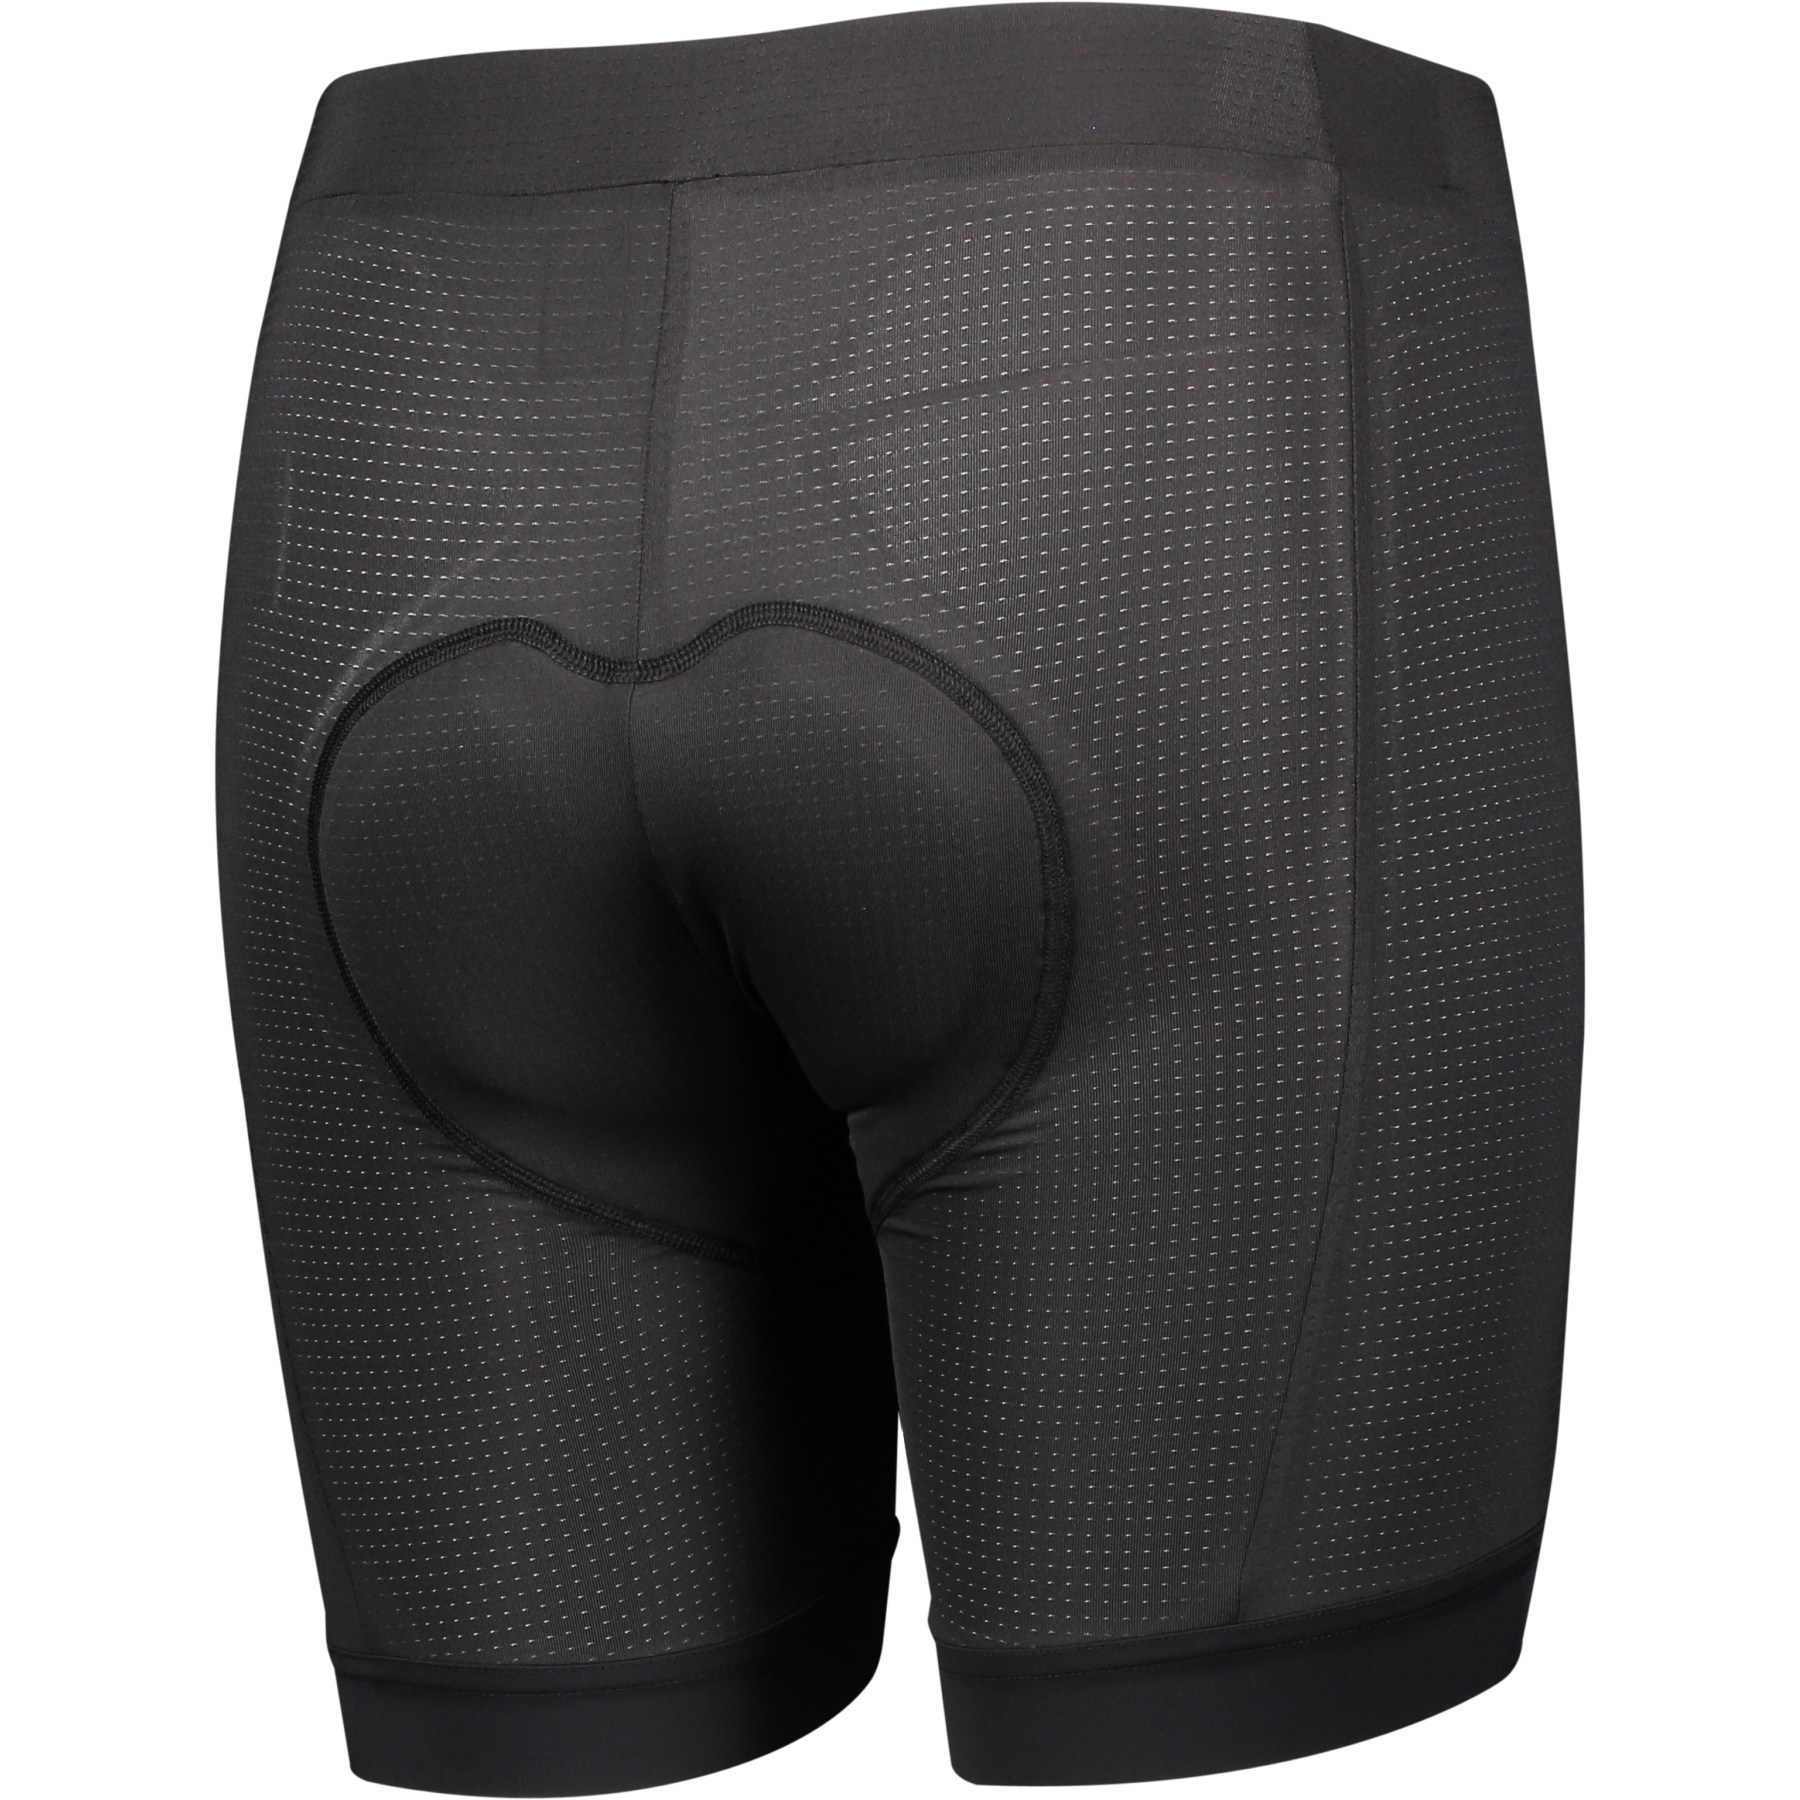 https://images.bike24.com/i/mb/98/b6/db/scott-trail-underwear-pro-3plus-women-bike-shorts-black-2-952992.jpg